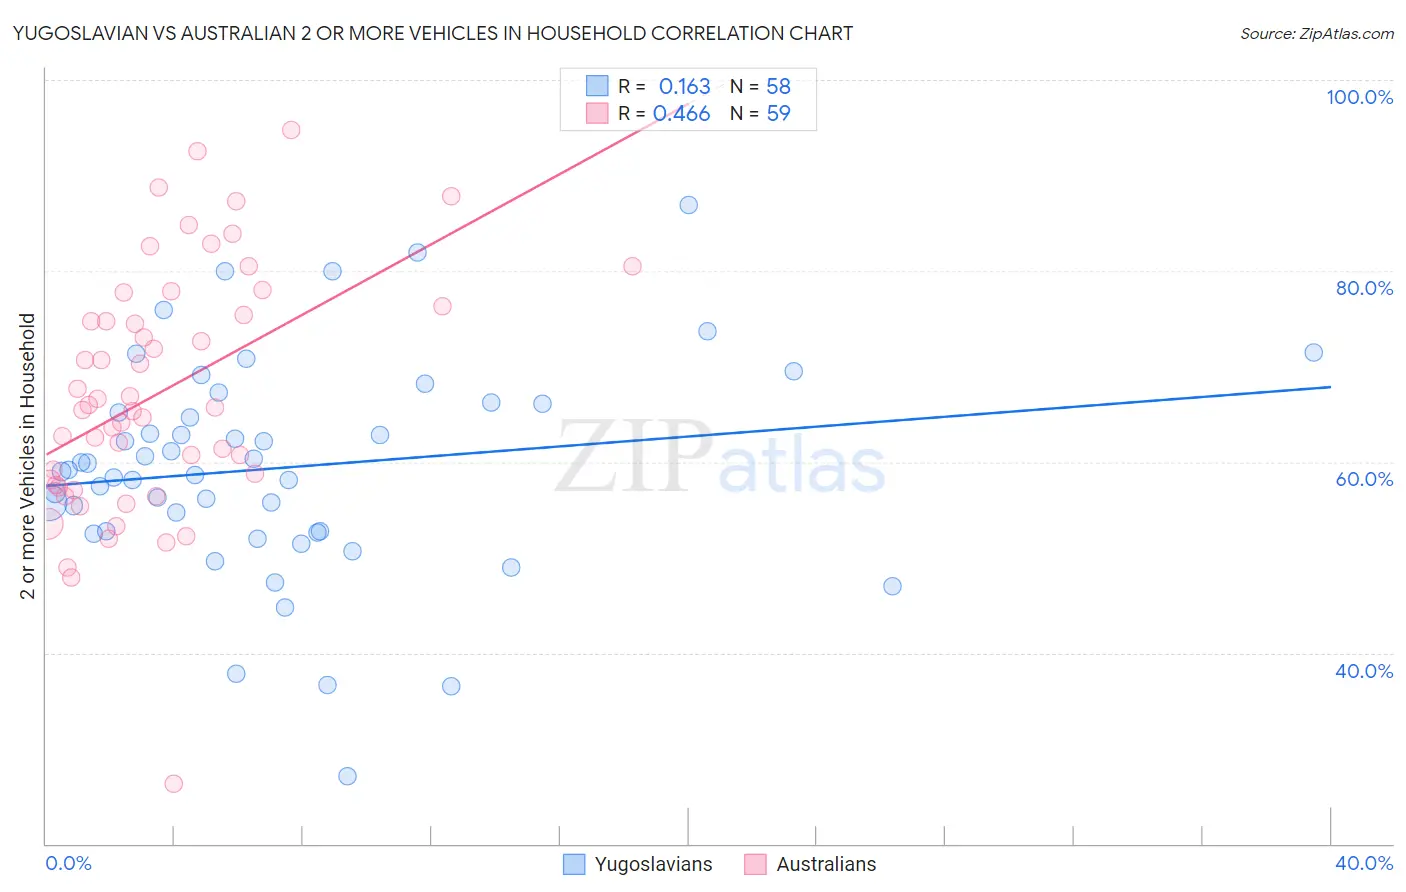 Yugoslavian vs Australian 2 or more Vehicles in Household